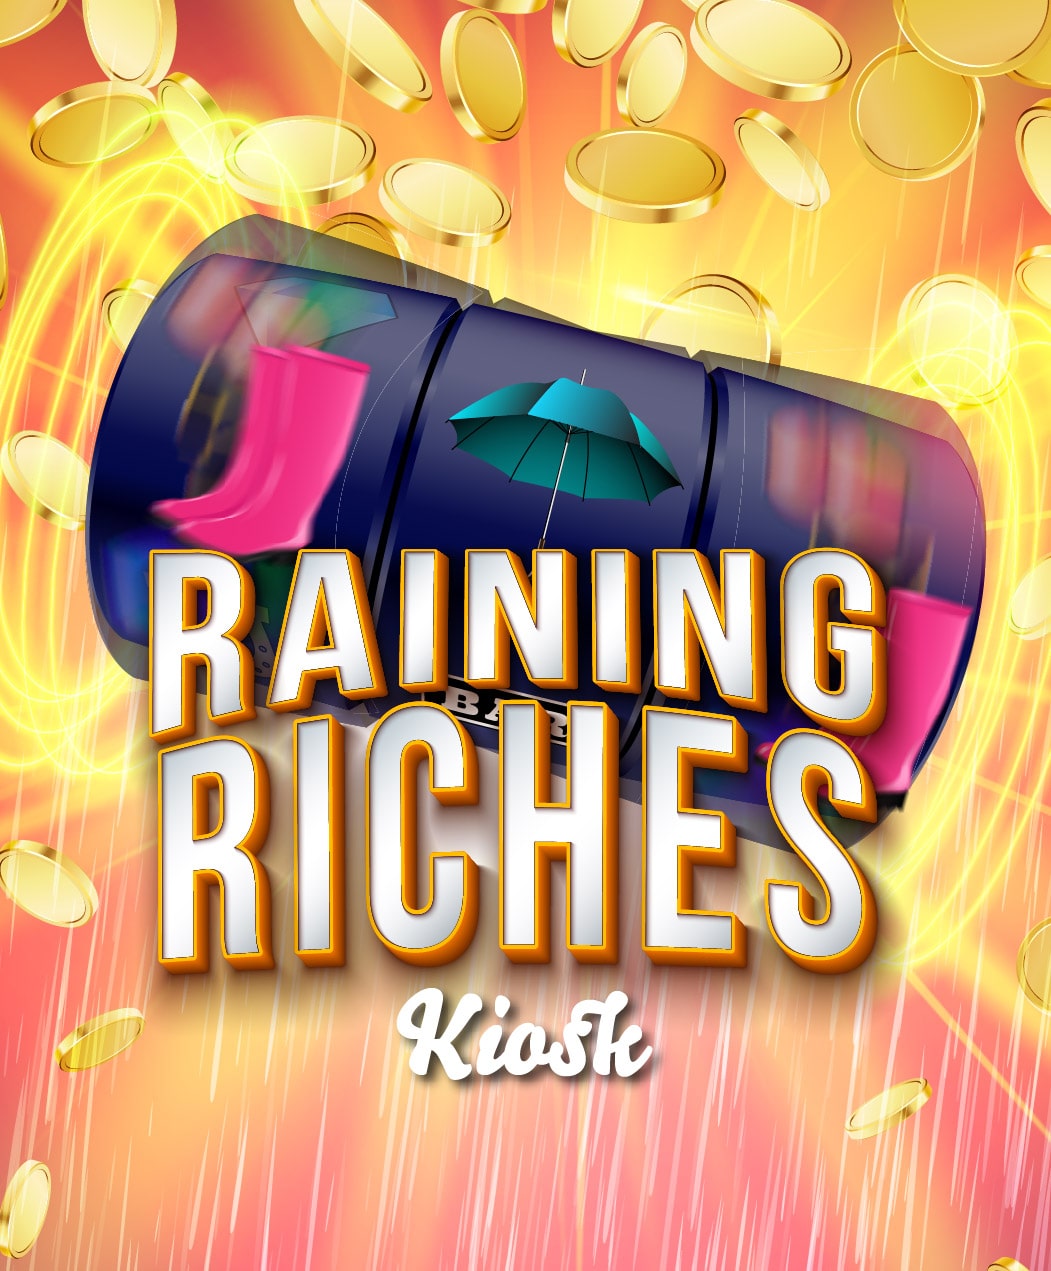 Raining Riches Kiosk